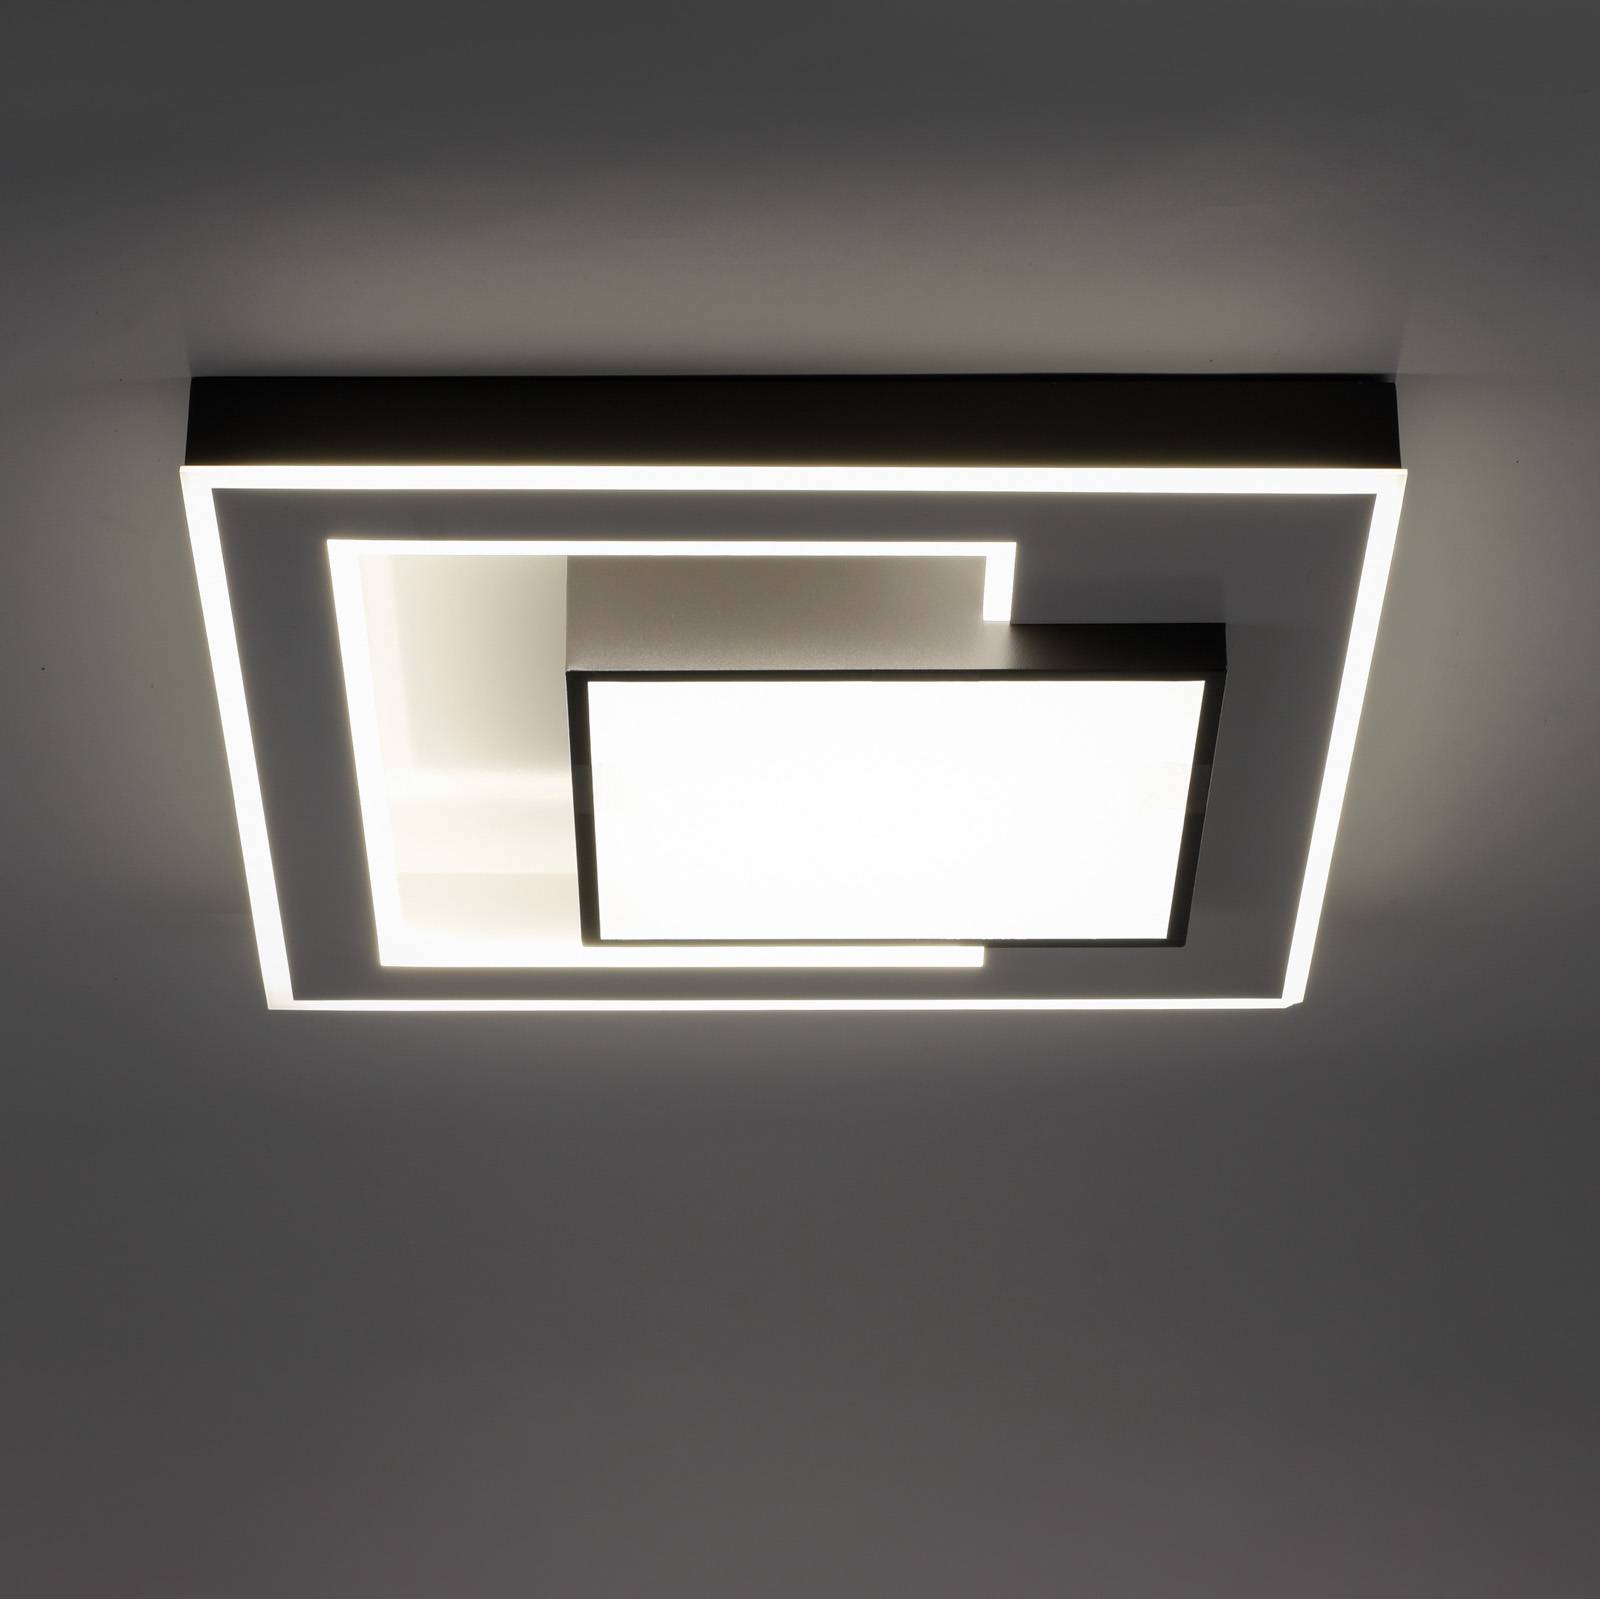 Image of Q-Smart-Home Paul Neuhaus Q-Alta plafonnier LED, 55x55cm 4012248358009